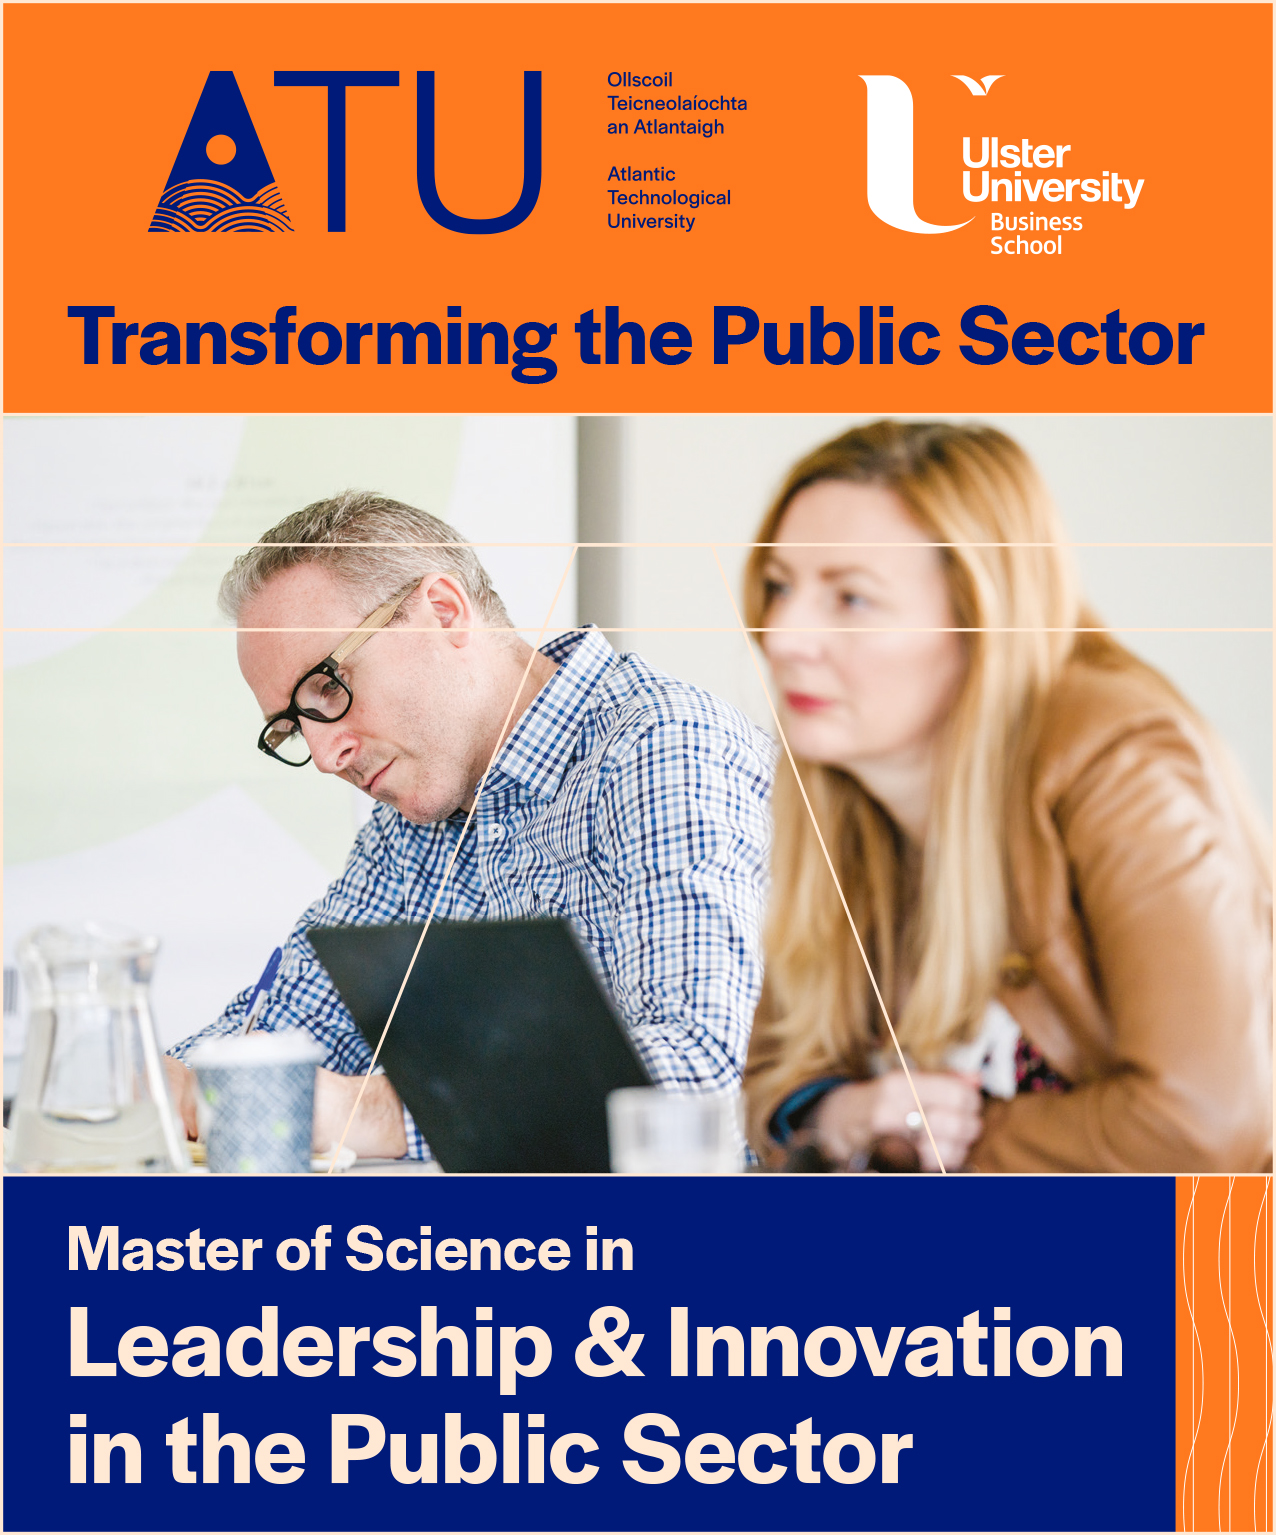 ATU_Executive Masters Programmes-2